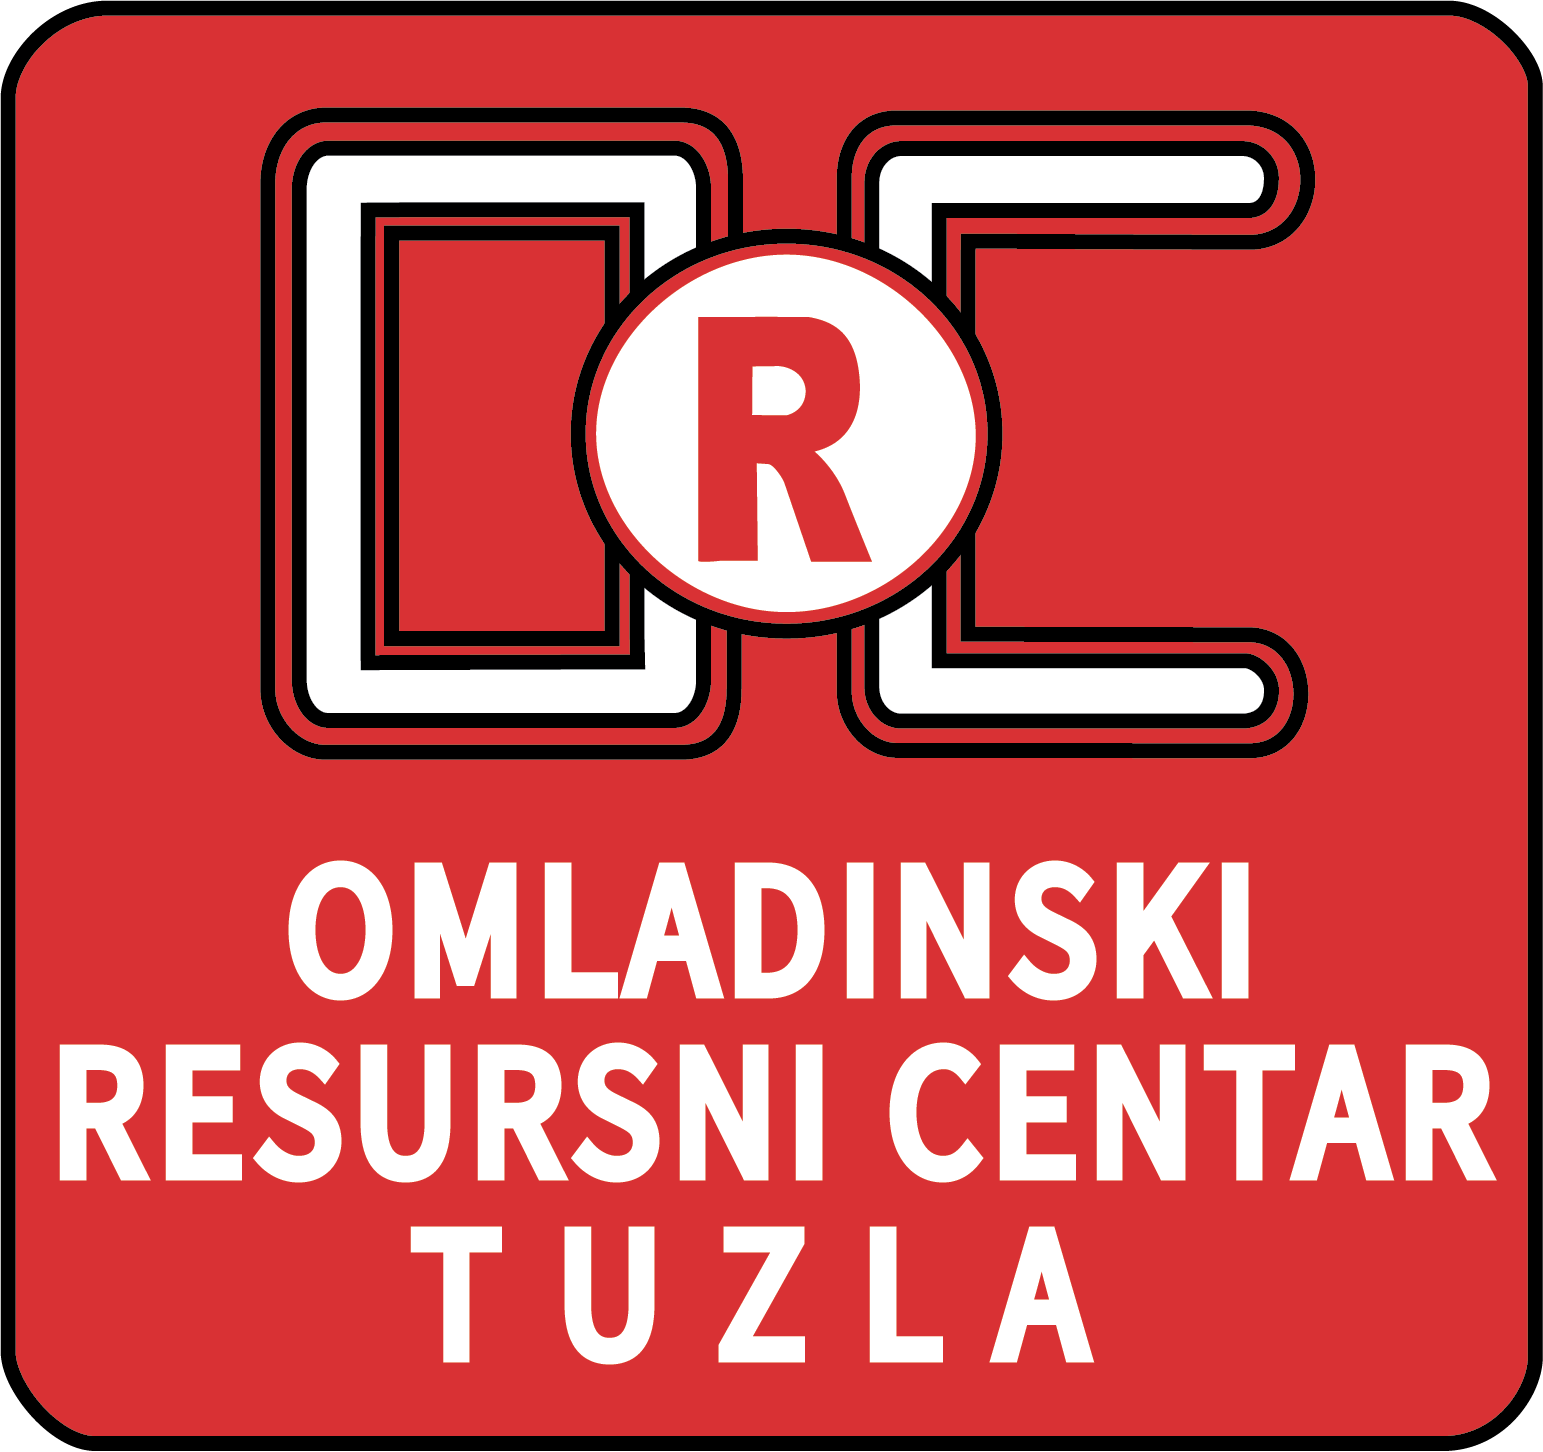 Omladinski Resursni Centar Tuzla